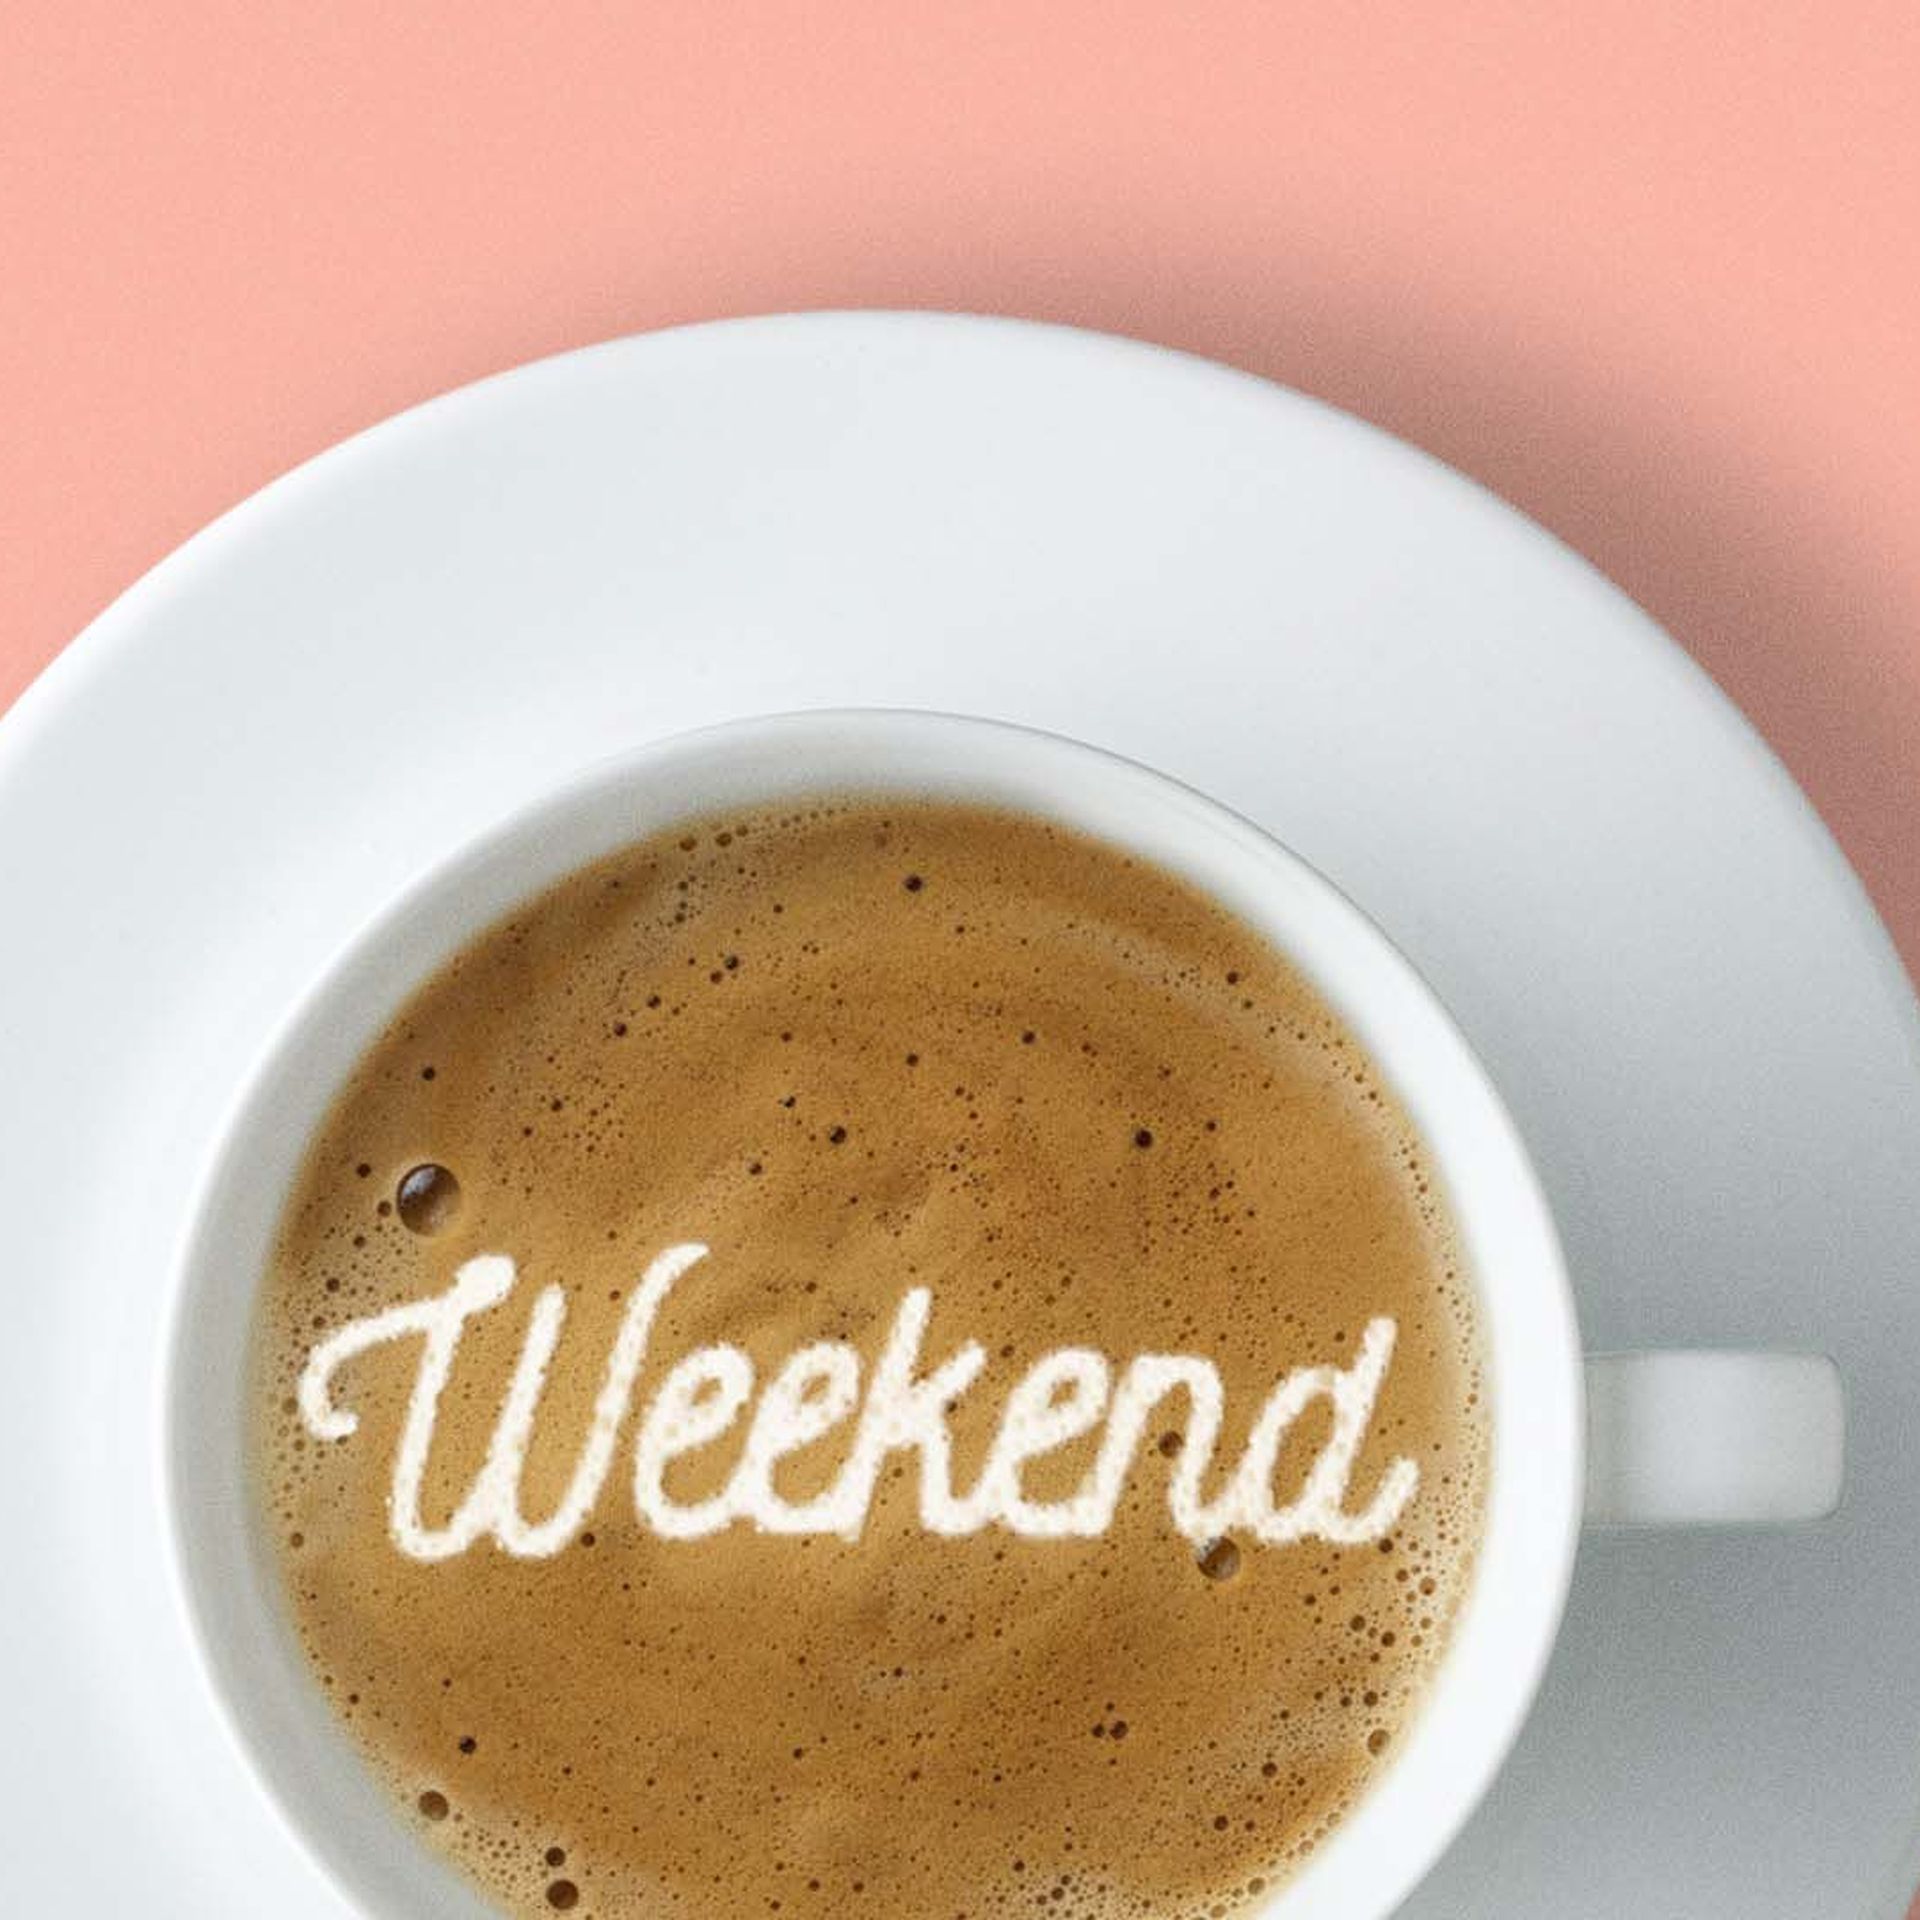 Illustration of a latte with "weekend" written in the foam.